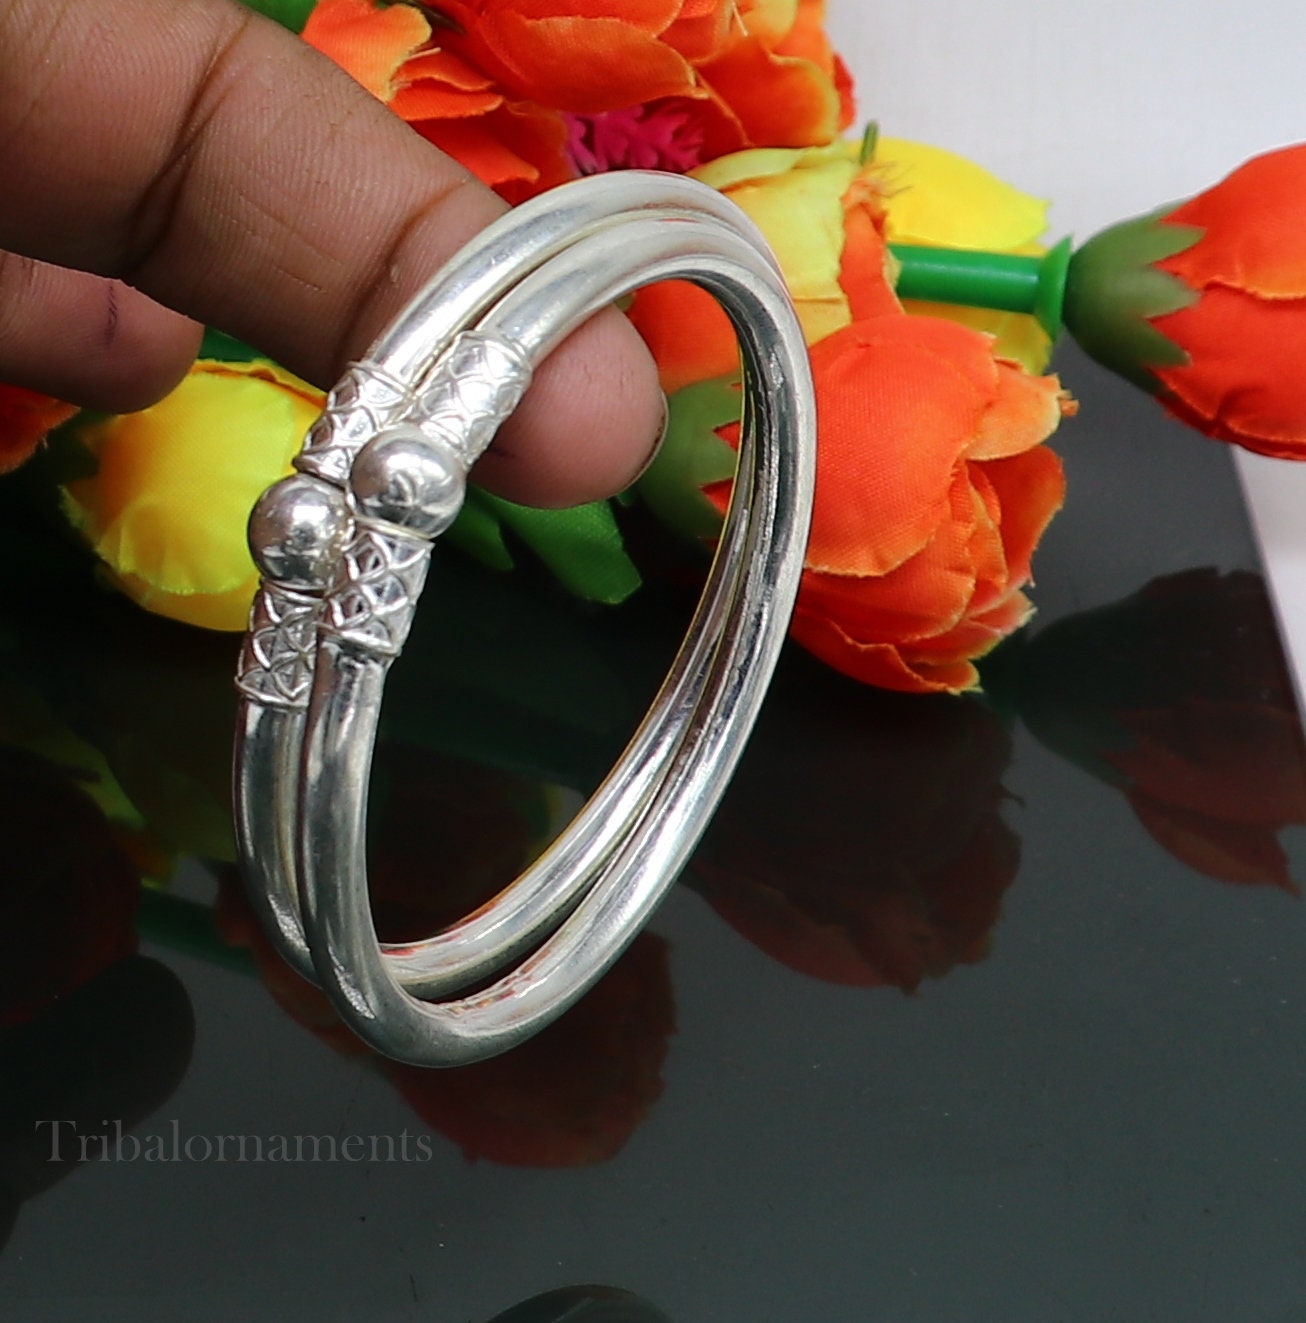 Plain shiny sterling silver stylish designer bangle bracelet kada pure silver gifting jewelry, brides made bangles from india nba226 - TRIBAL ORNAMENTS